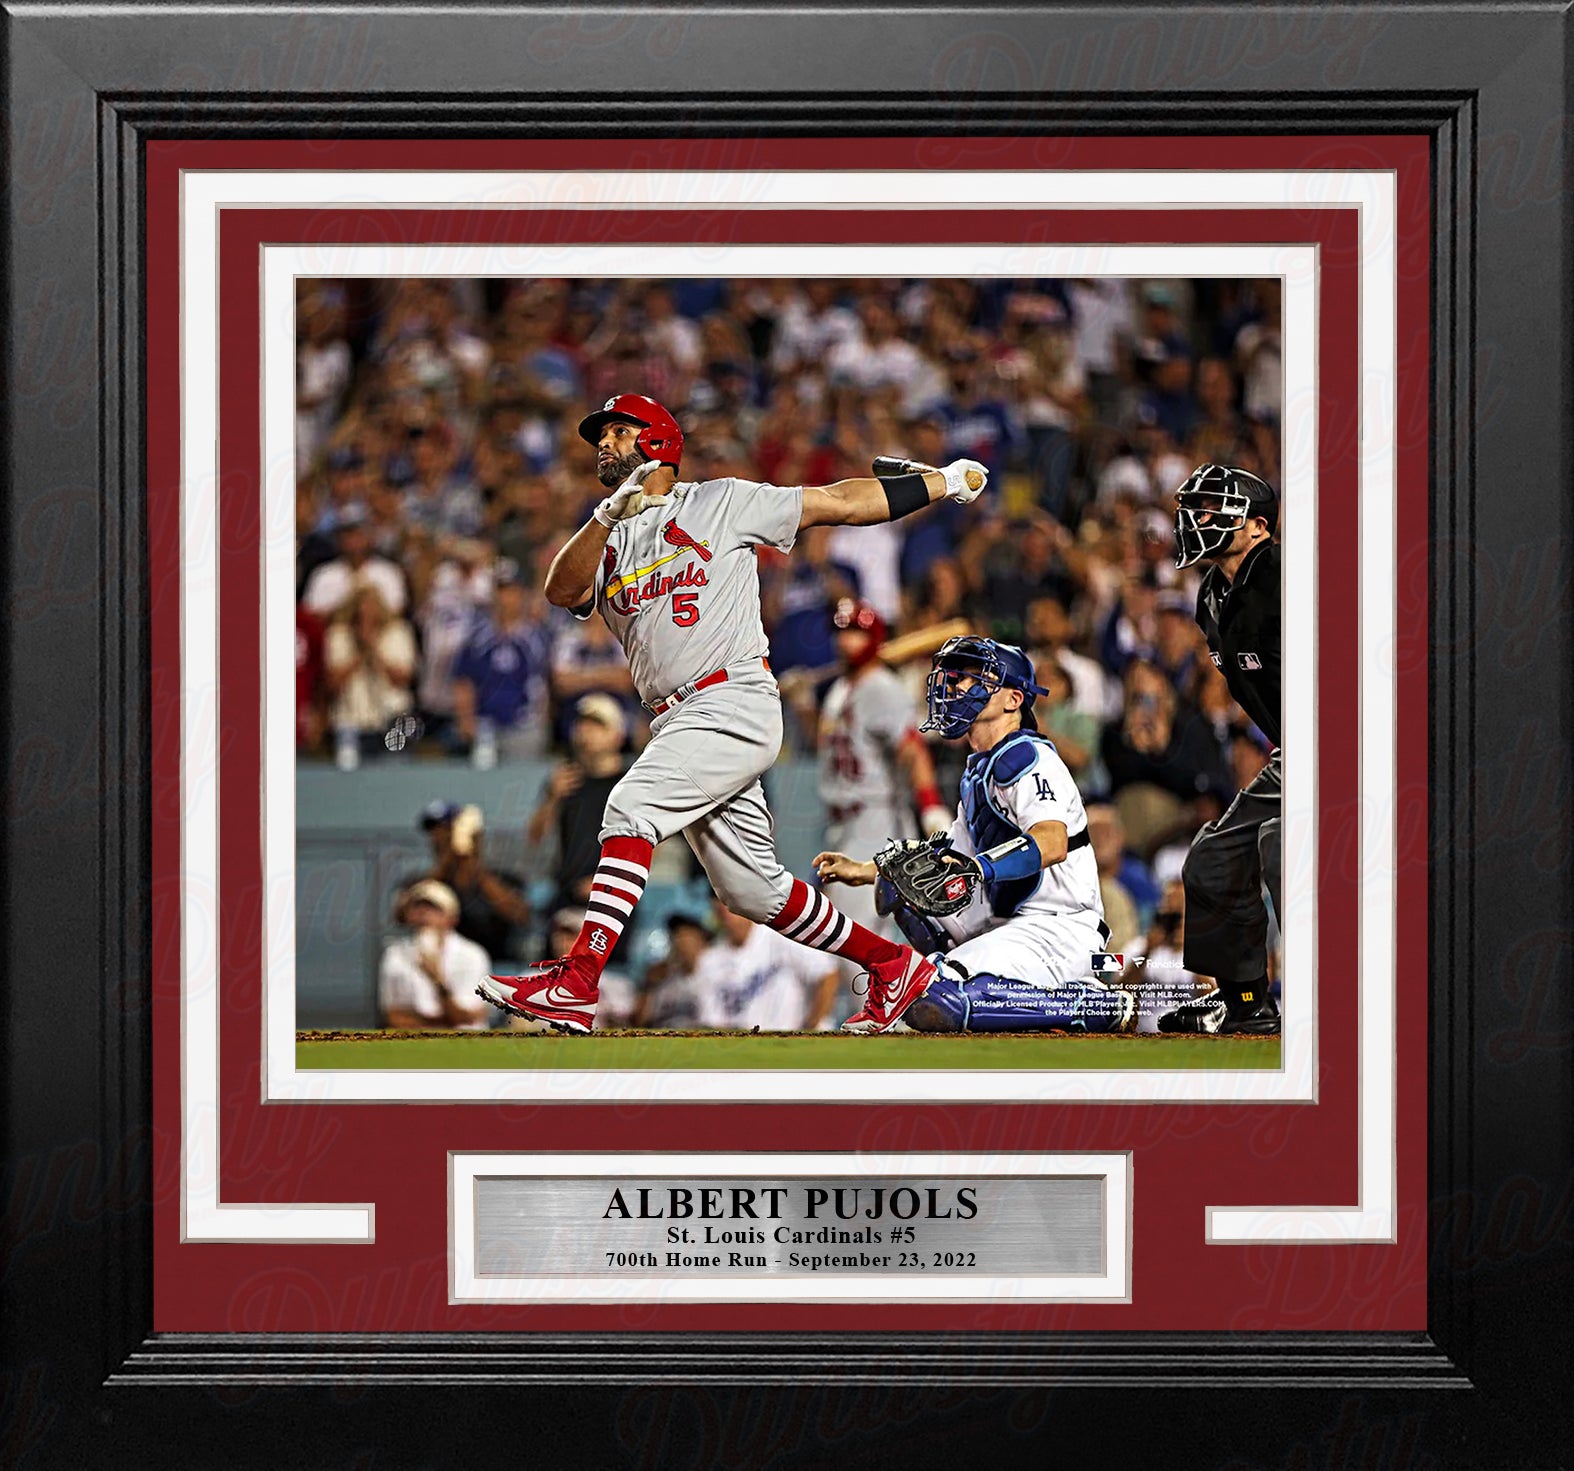 Albert Pujols 700th Home Run St. Louis Cardinals 8" x 10" Framed Baseball Photo - Dynasty Sports & Framing 